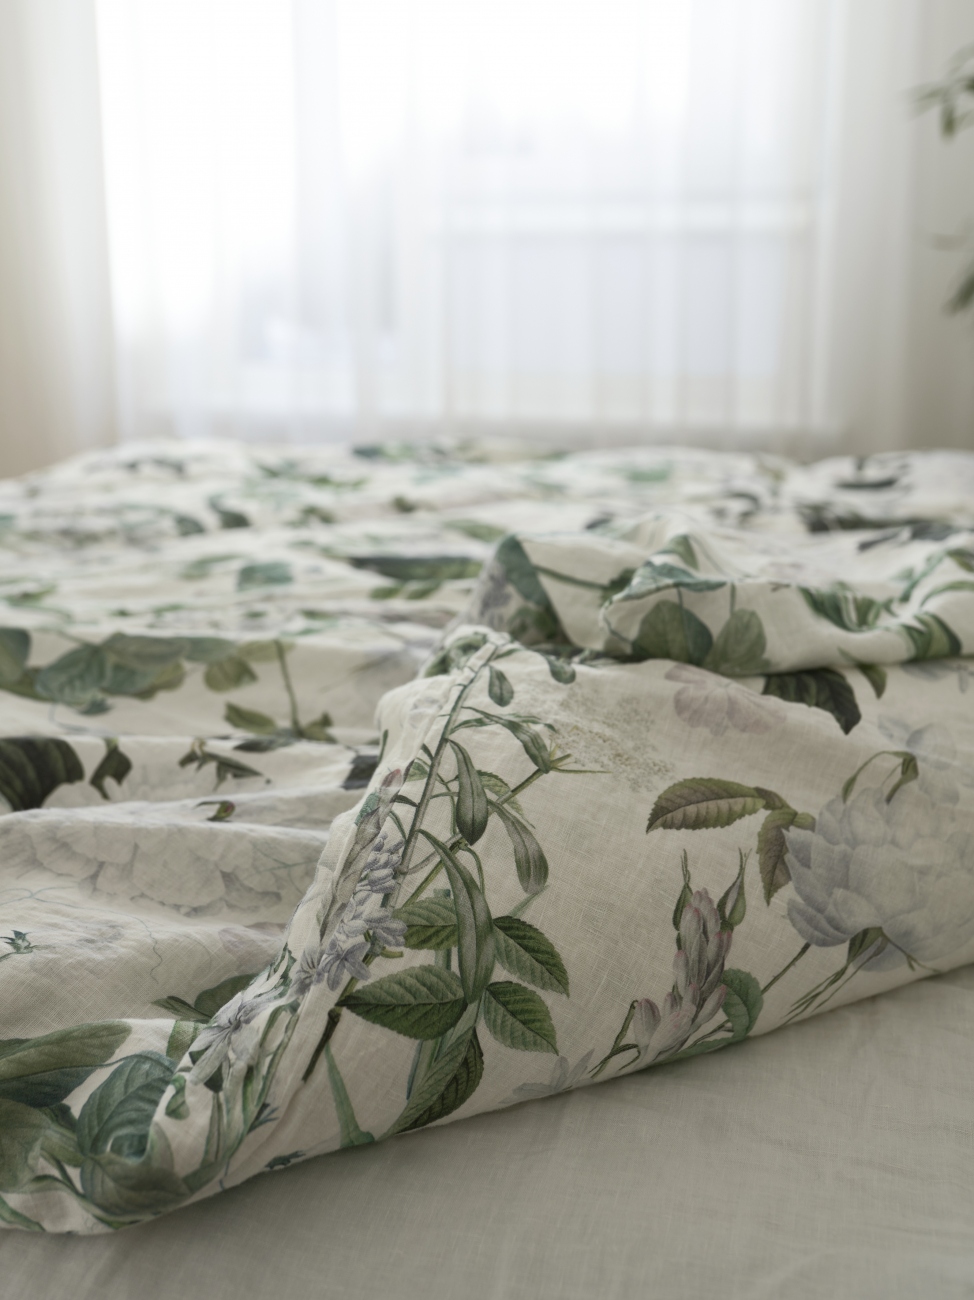 Linen bedding set with flower print